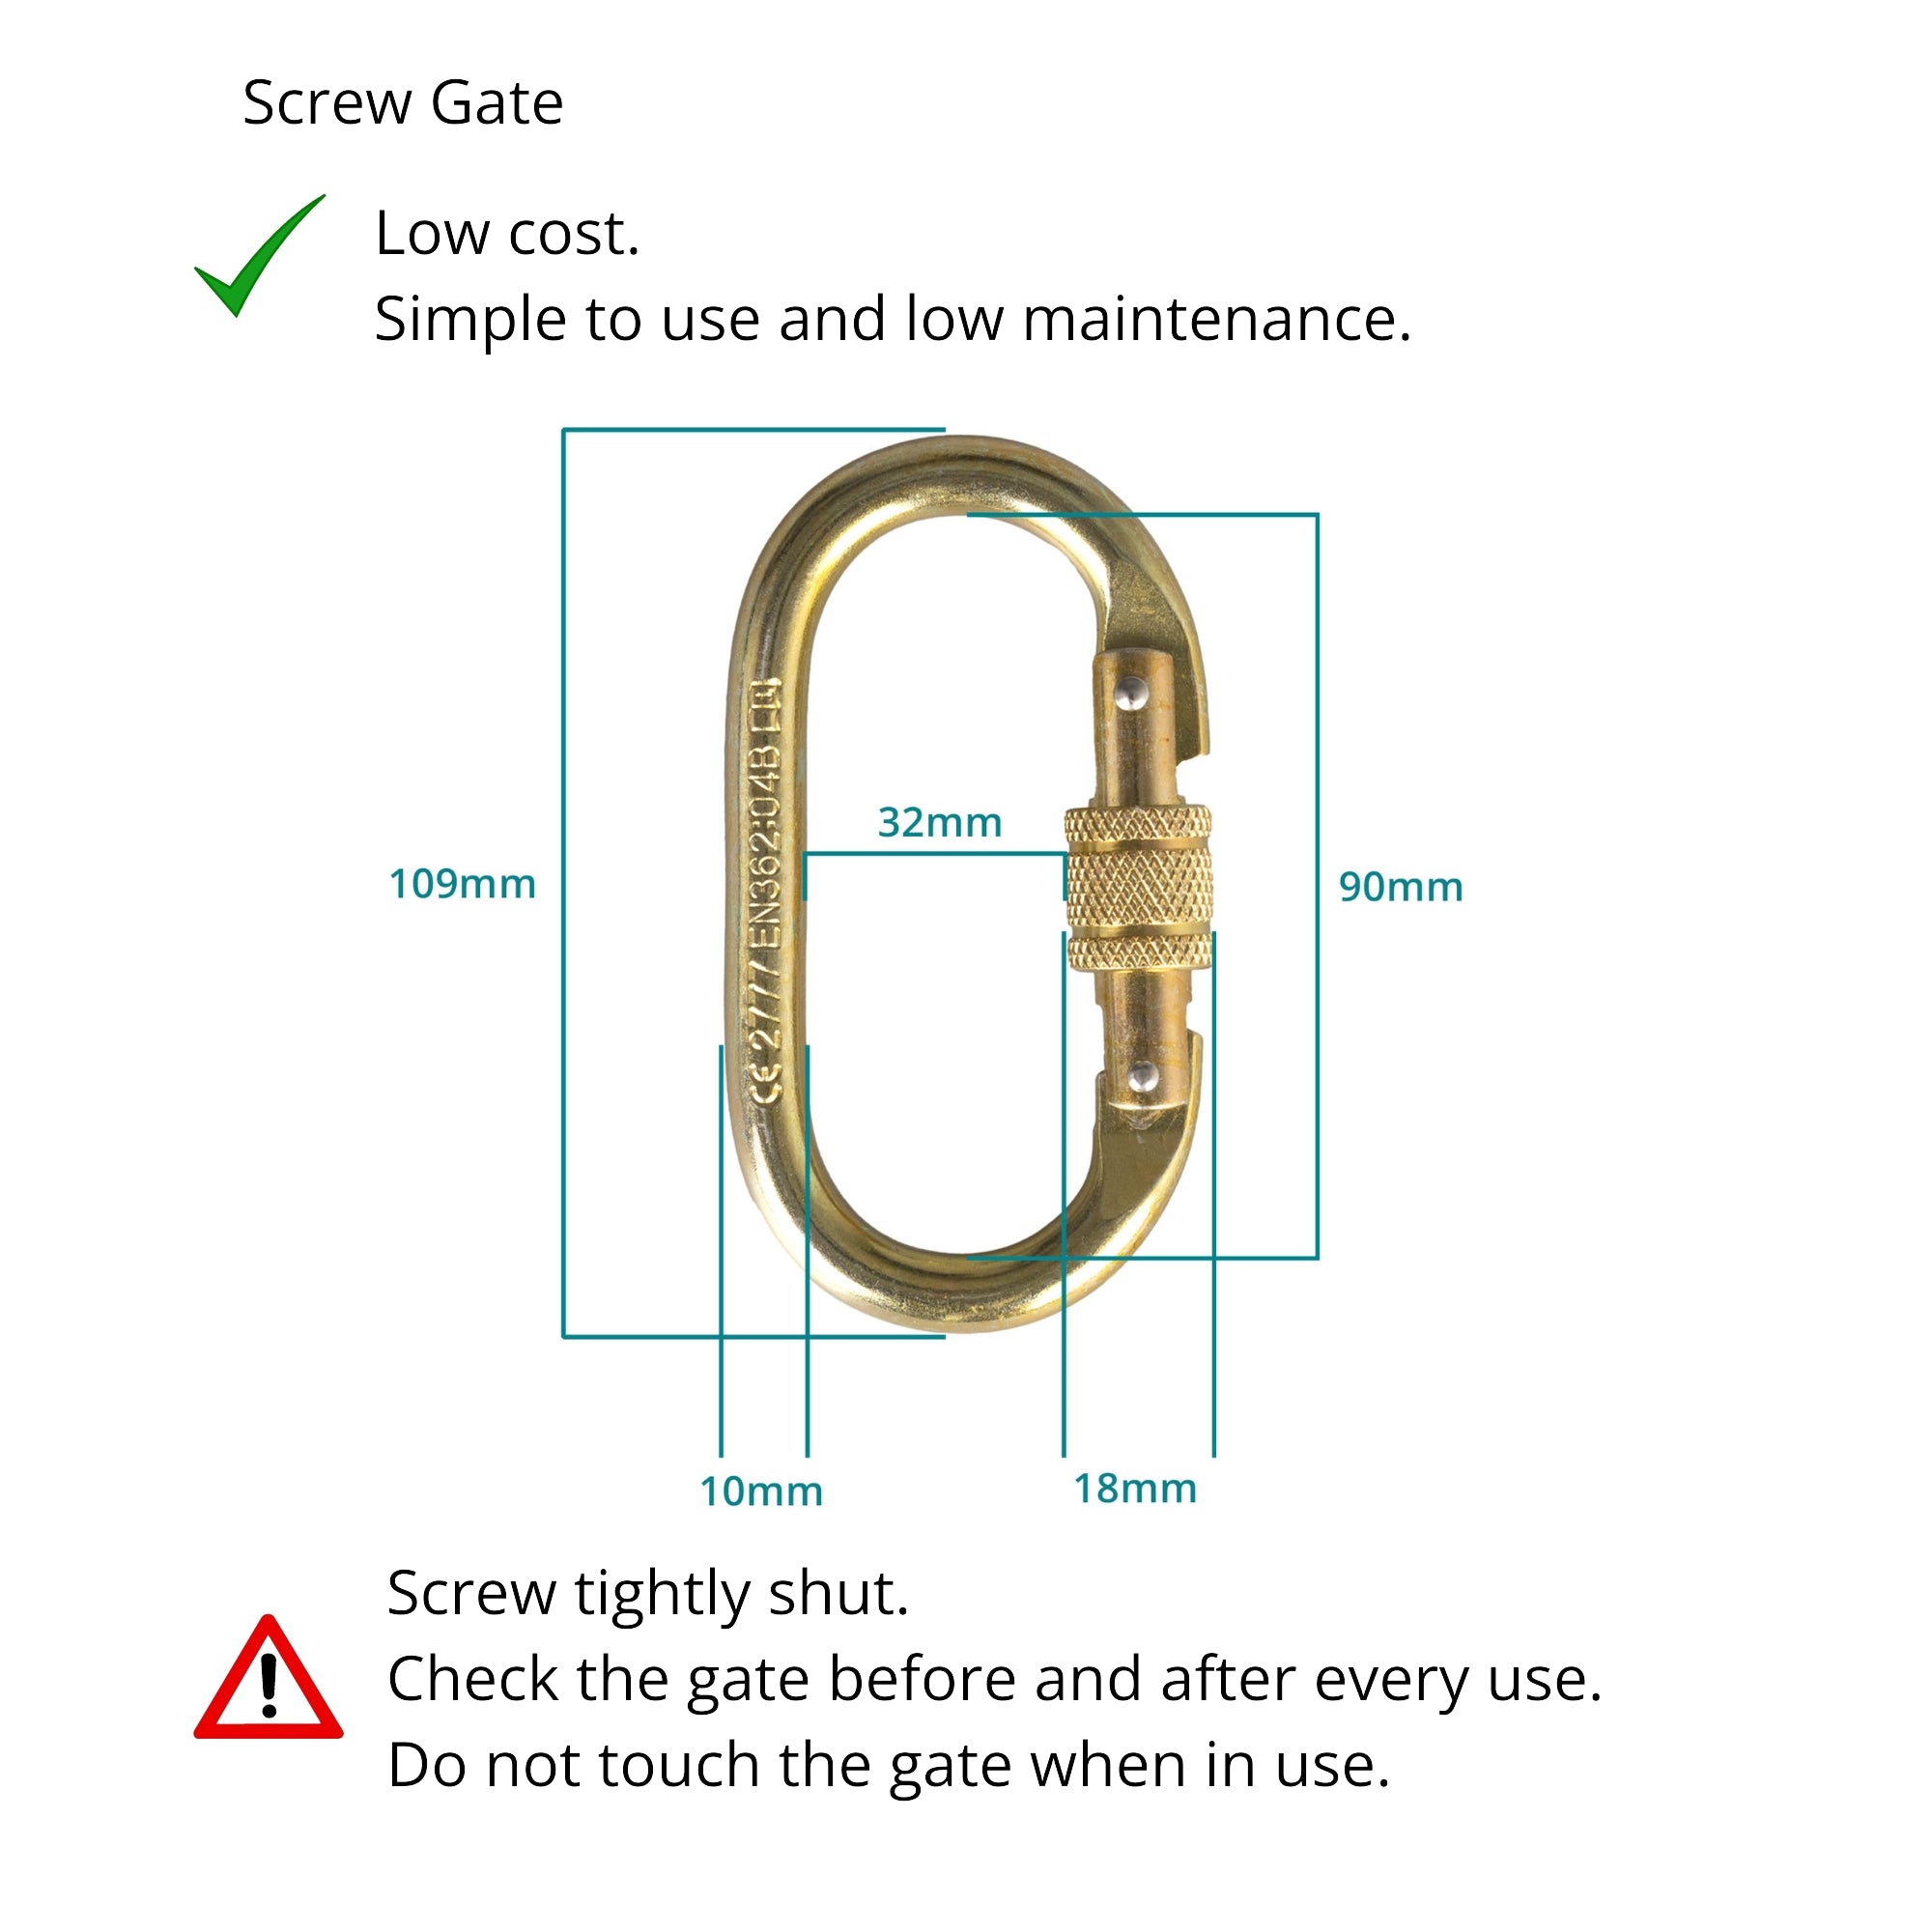 screw gate carabiner measurements and info